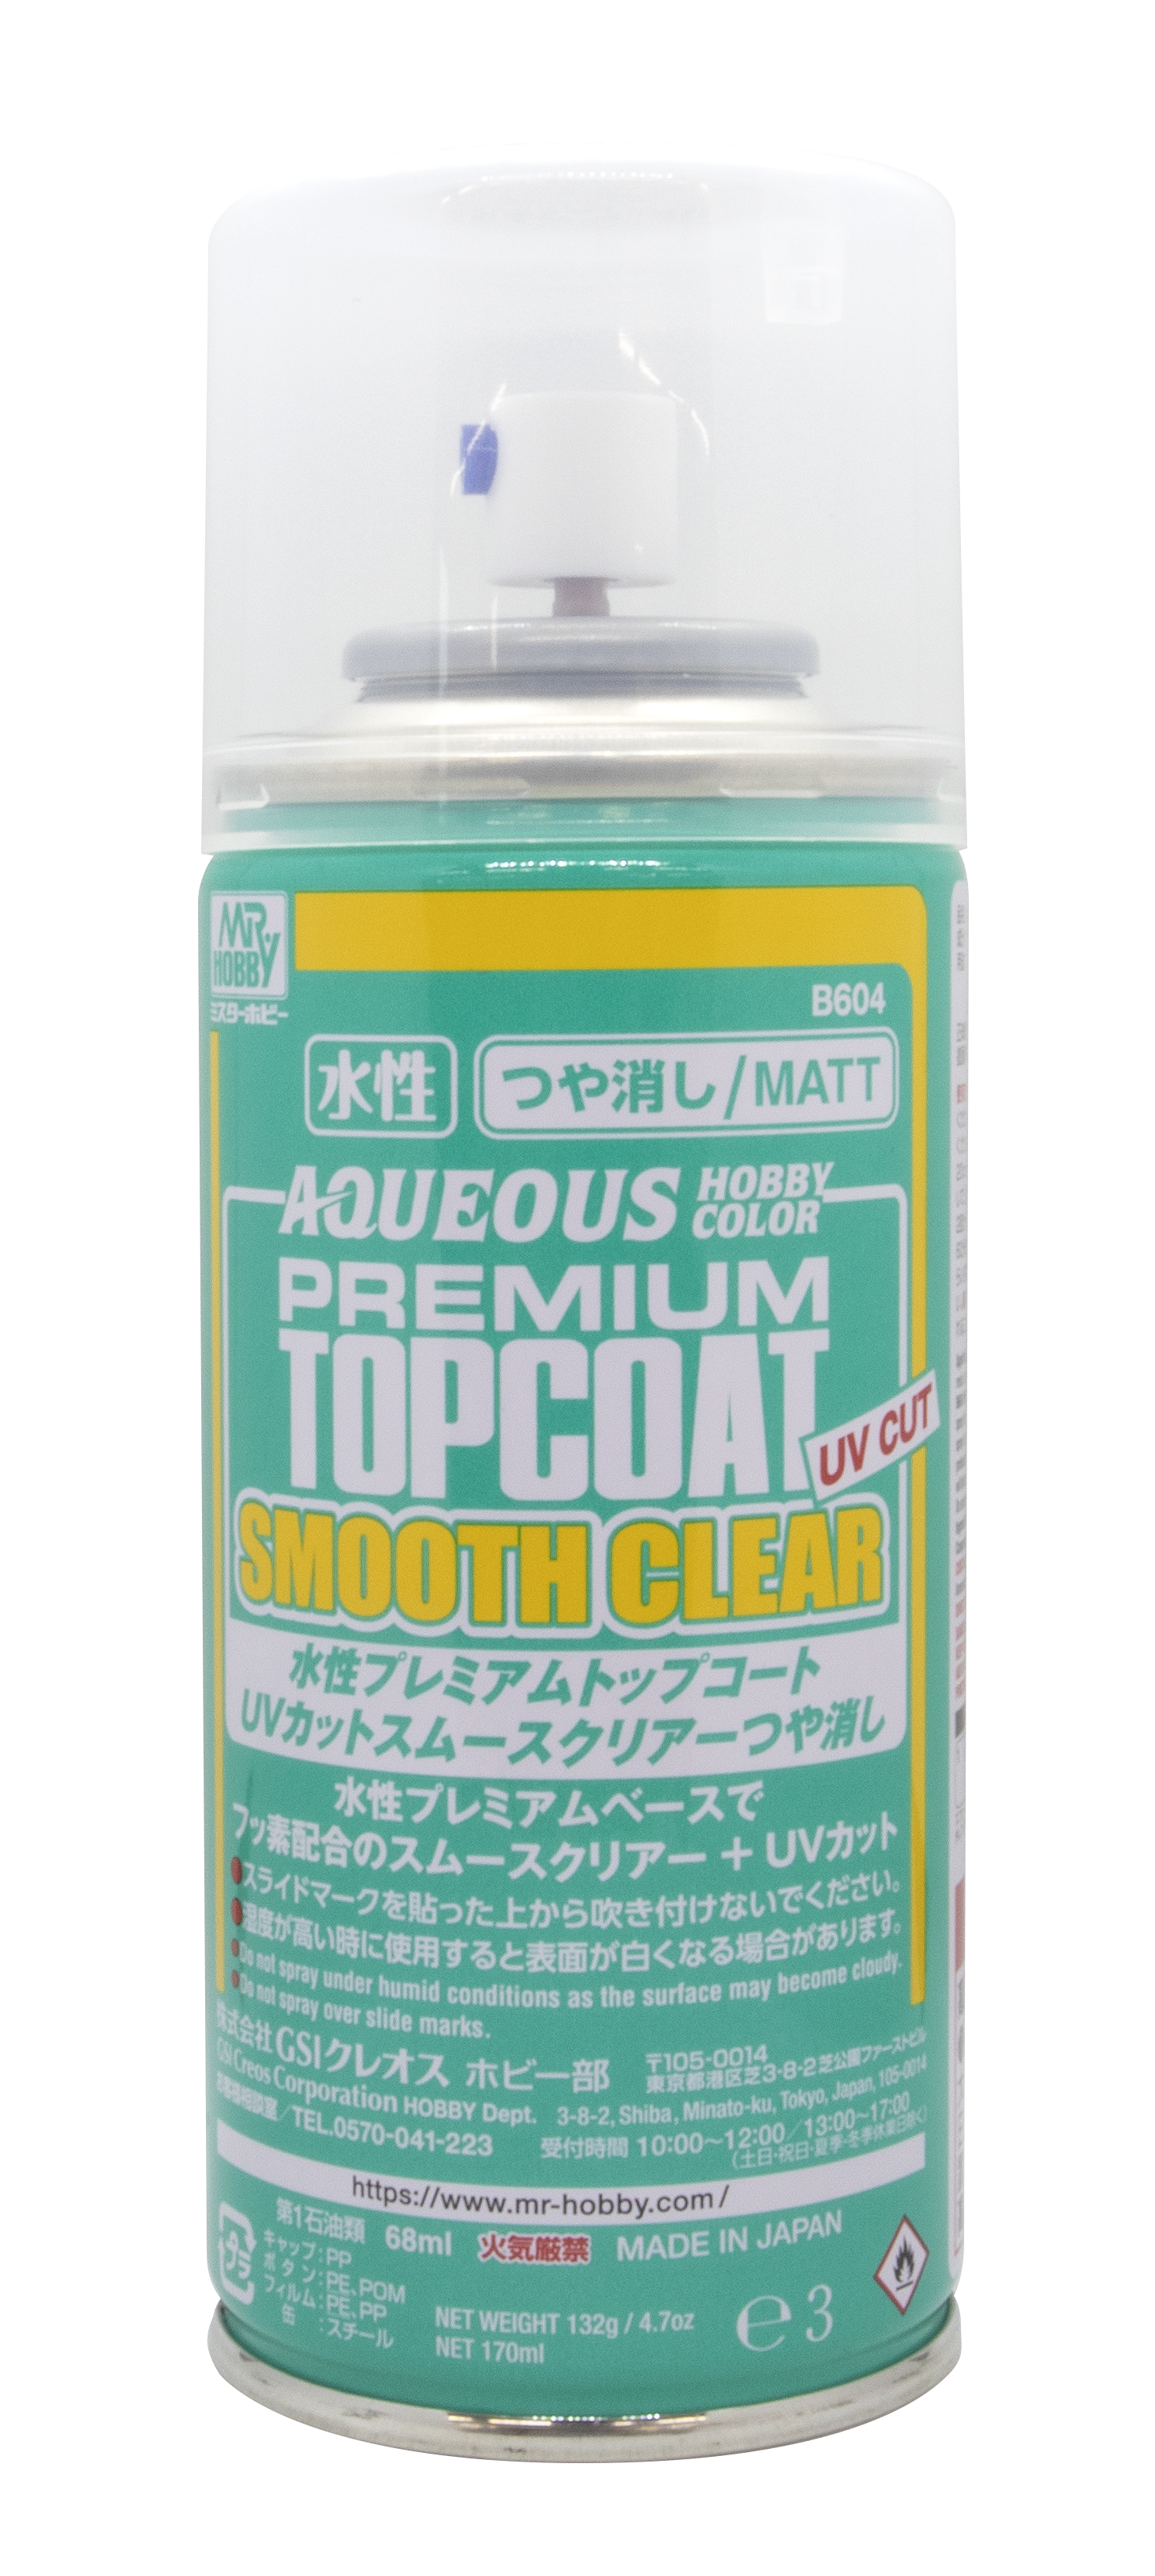 B604: Mr Premium Top Coat Smooth Clear UV Cut (Matt)